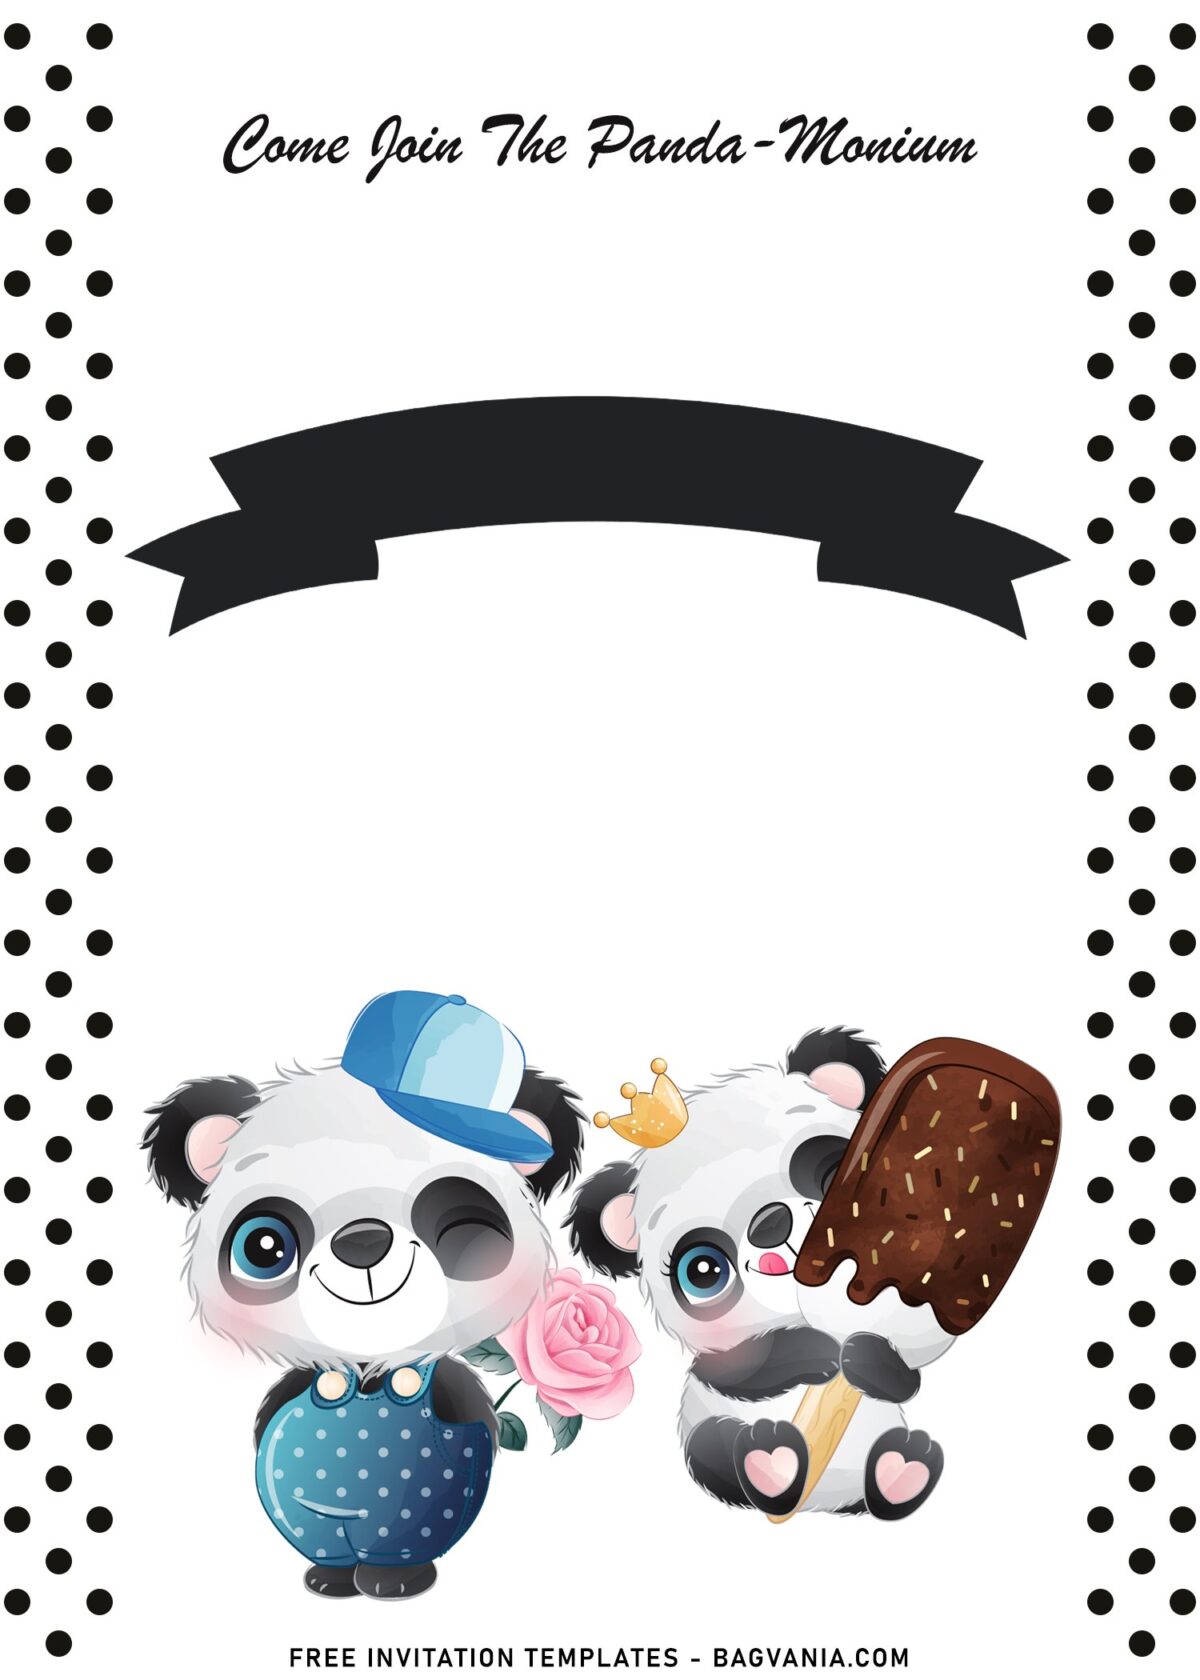 11+ Fluffy Panda Birthday Invitation Templates For Your Kid's Birthday with polka dot border